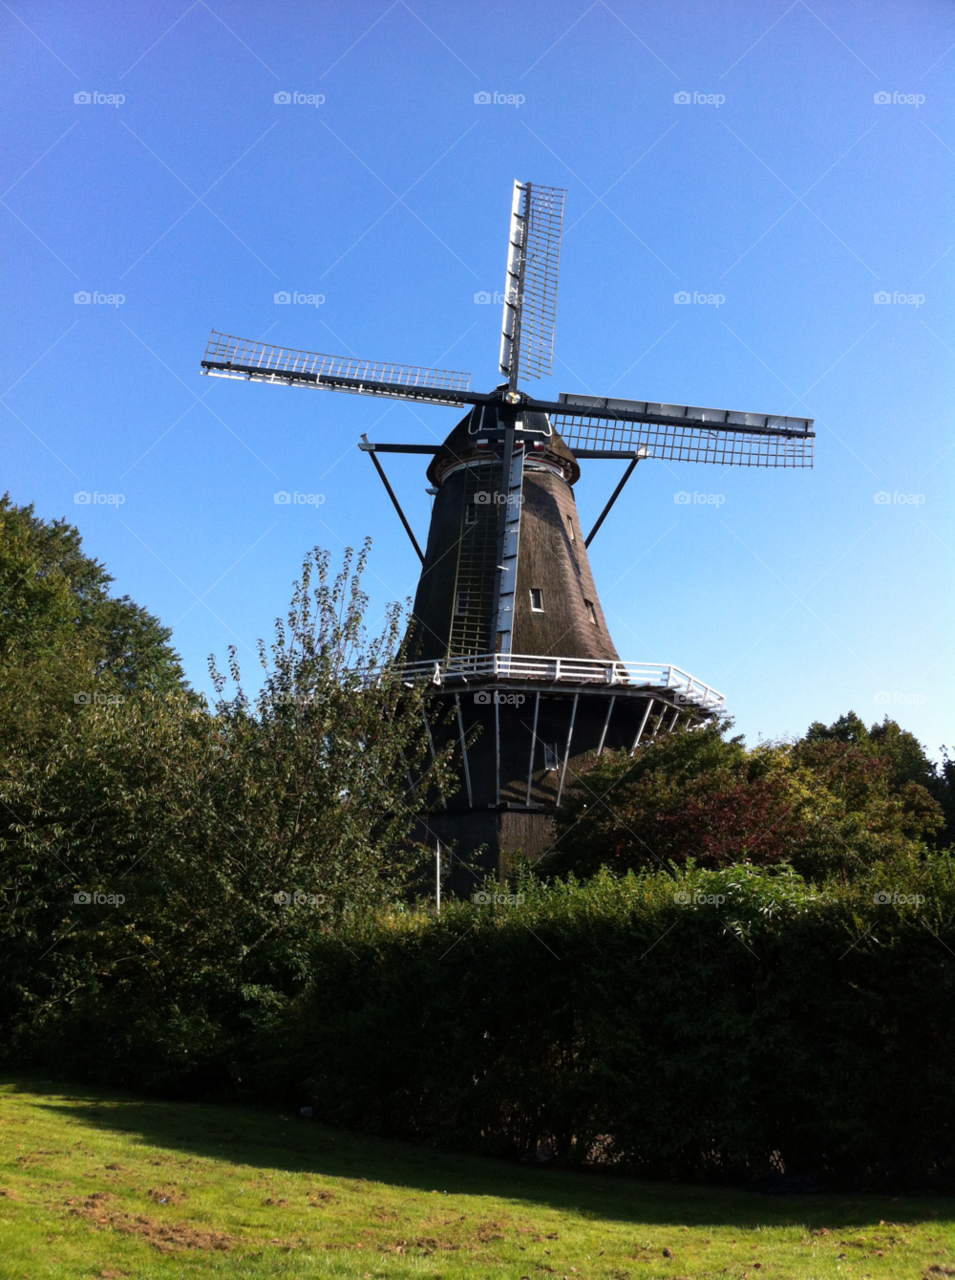 amsterdam windmill timeless by crgdunn